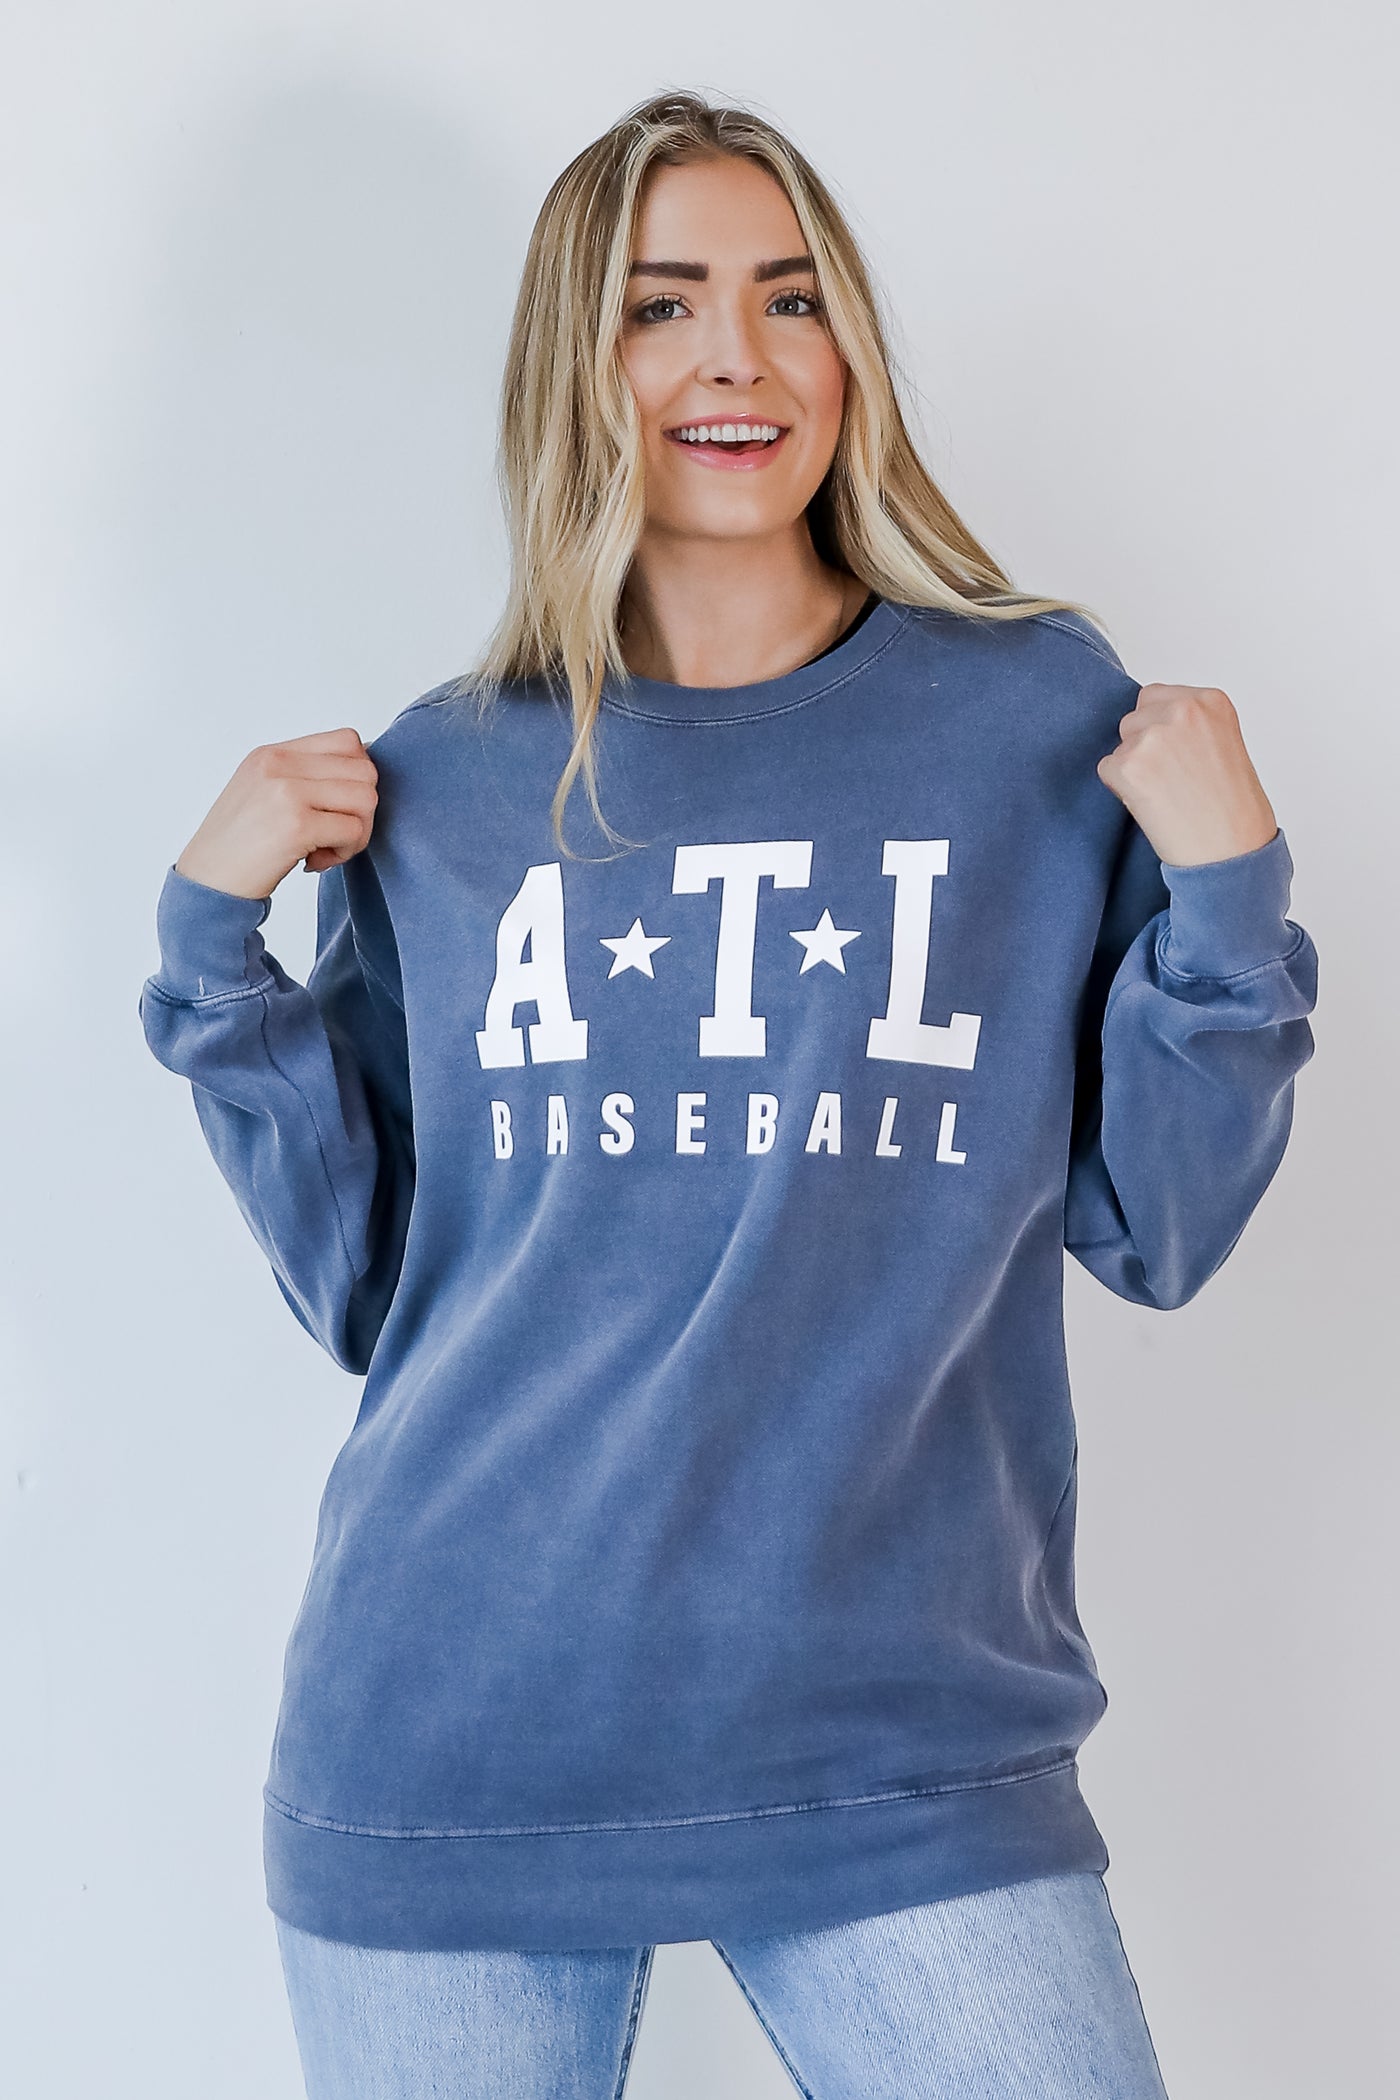 ATL Star Baseball Pullover. Braves Graphic Sweatshirt. Braves Game Day Outfit. Atl Sweatshirt